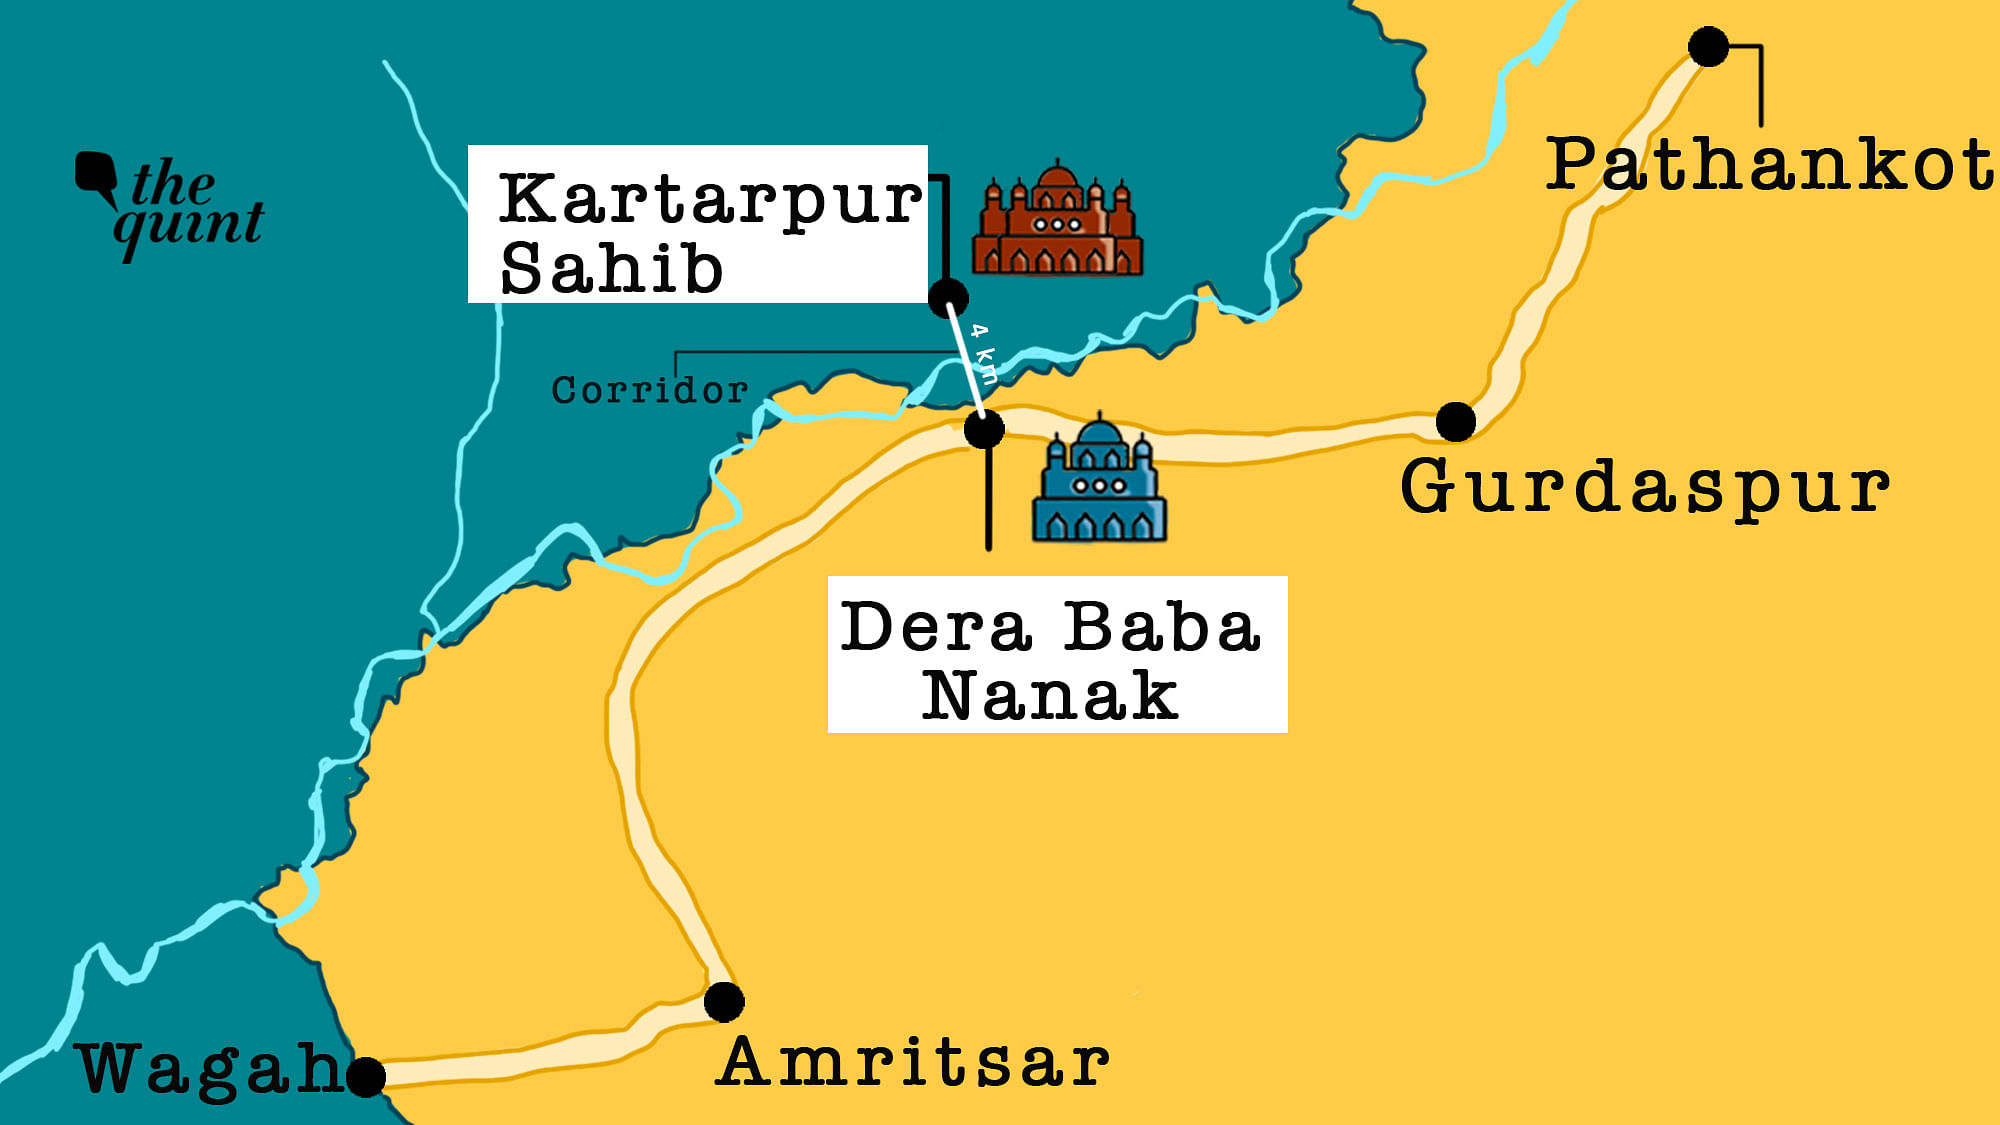 It was Kartarpur Sahib where Guru Nanak spent the last 17 years of his life.